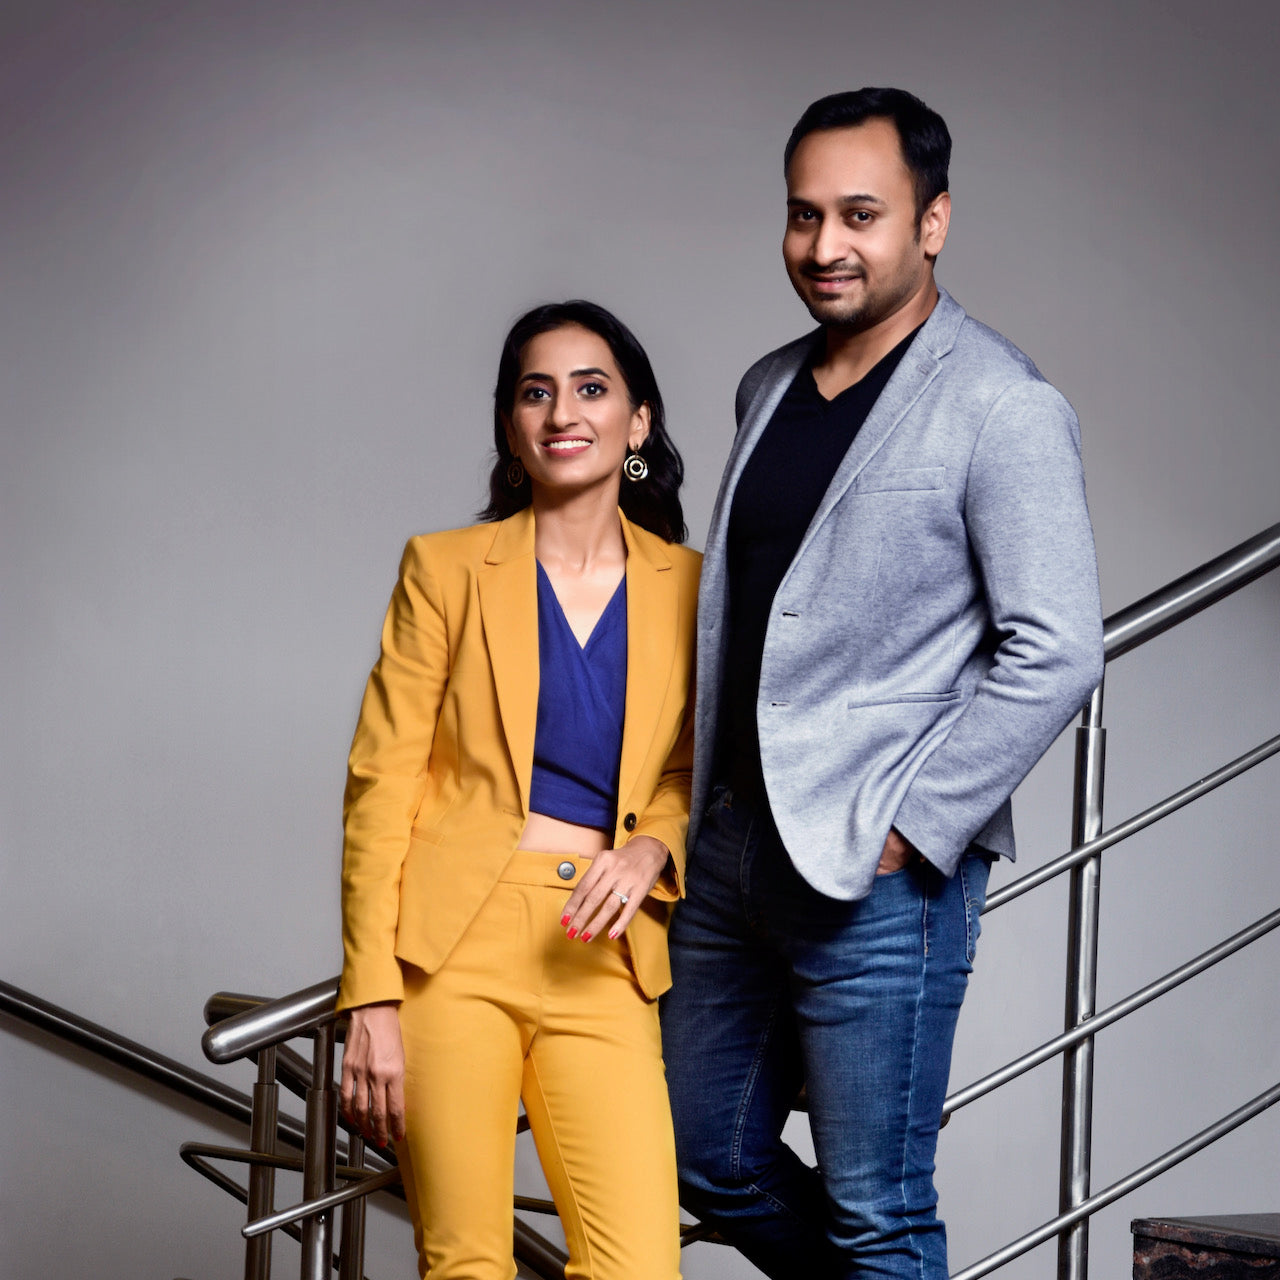 Vineeta Singh and Kaushik Mukherjee, the co-founders of SUGAR Cosmetics. 